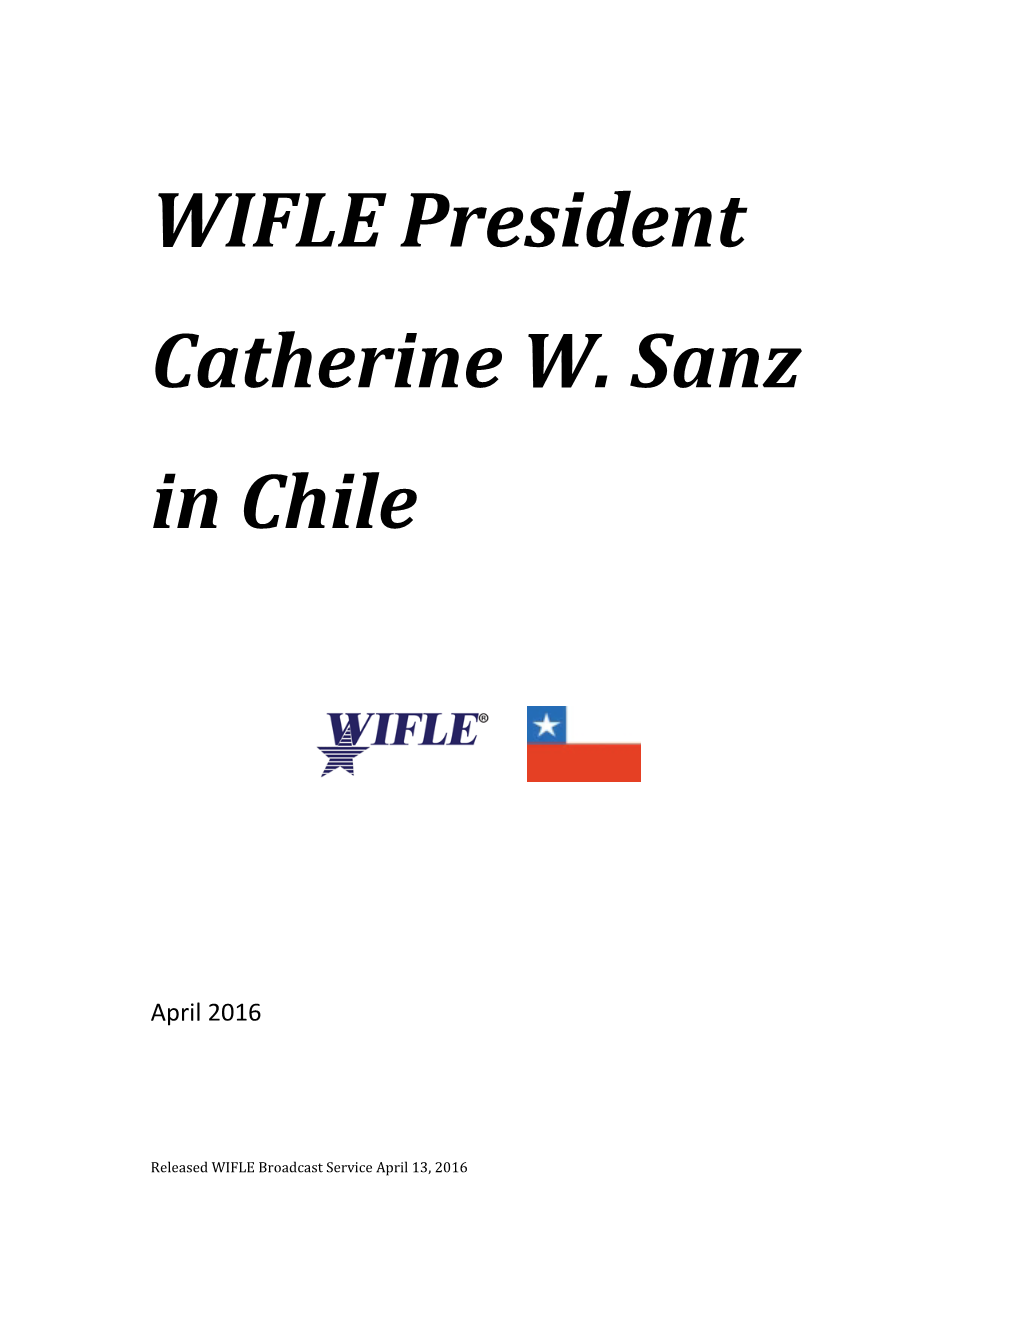 WIFLE President Catherine W. Sanz in Chile